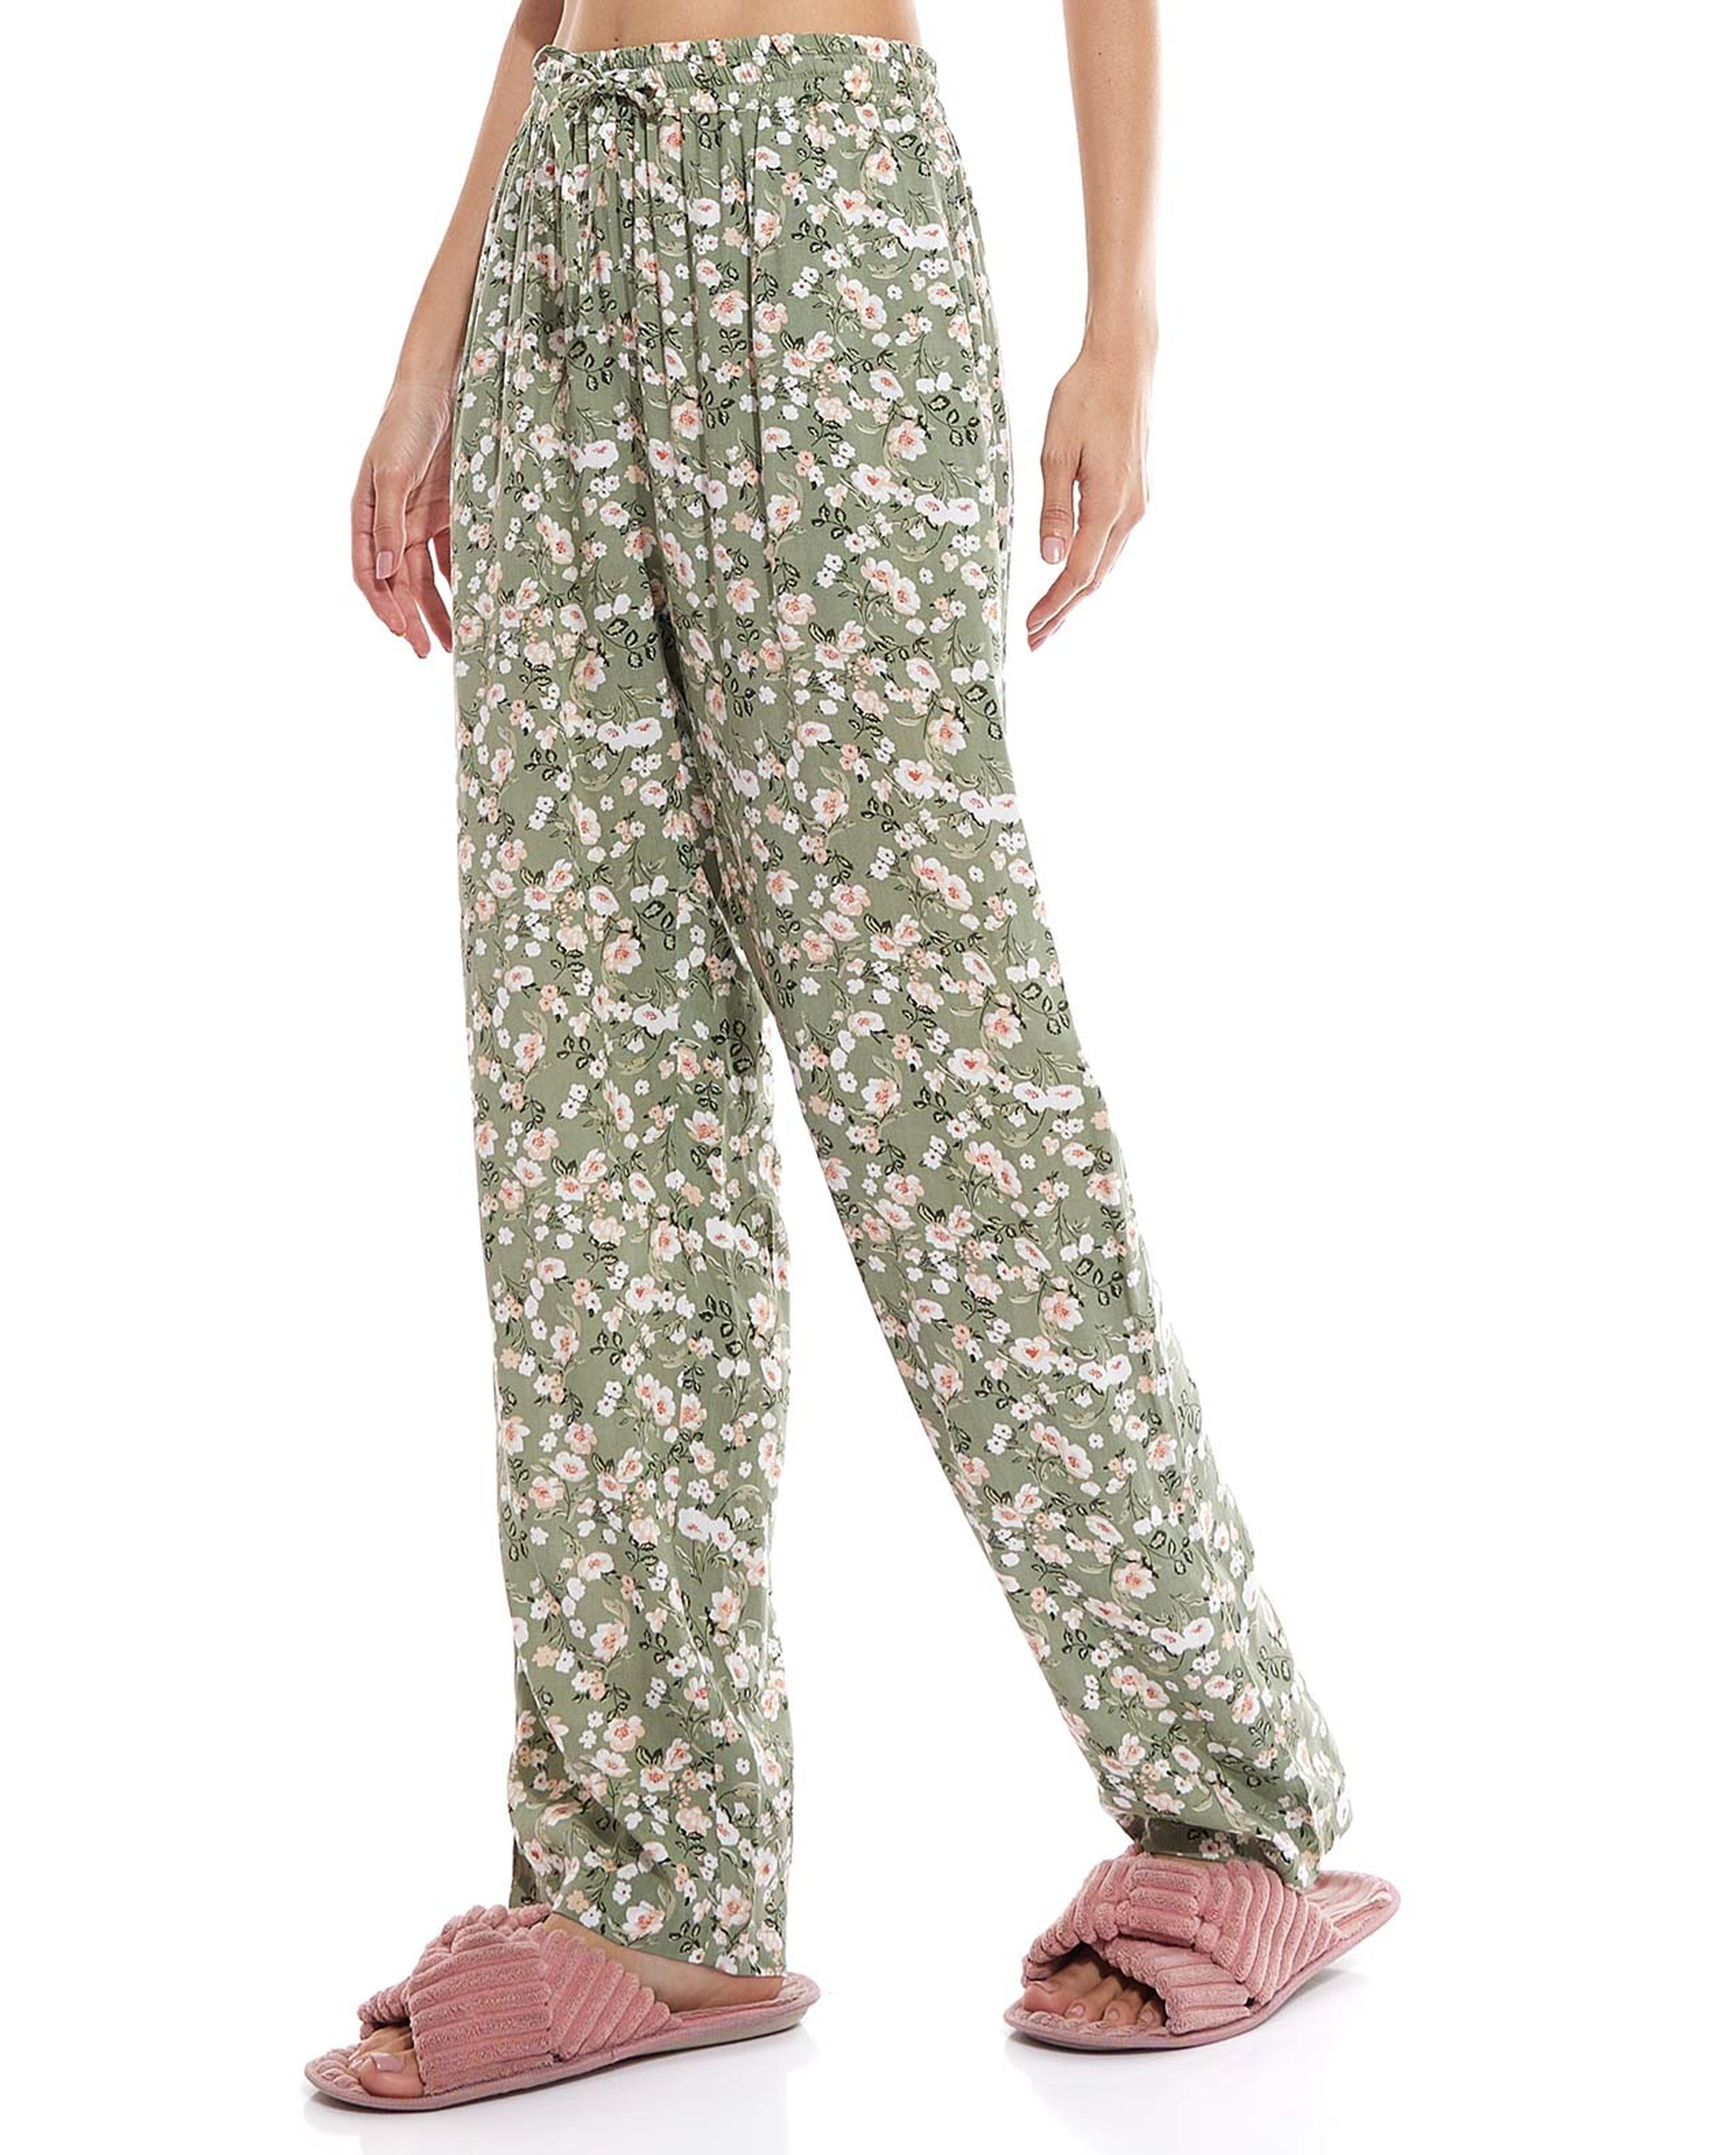 Floral Print Pyjama Pants with Drawstring Waist